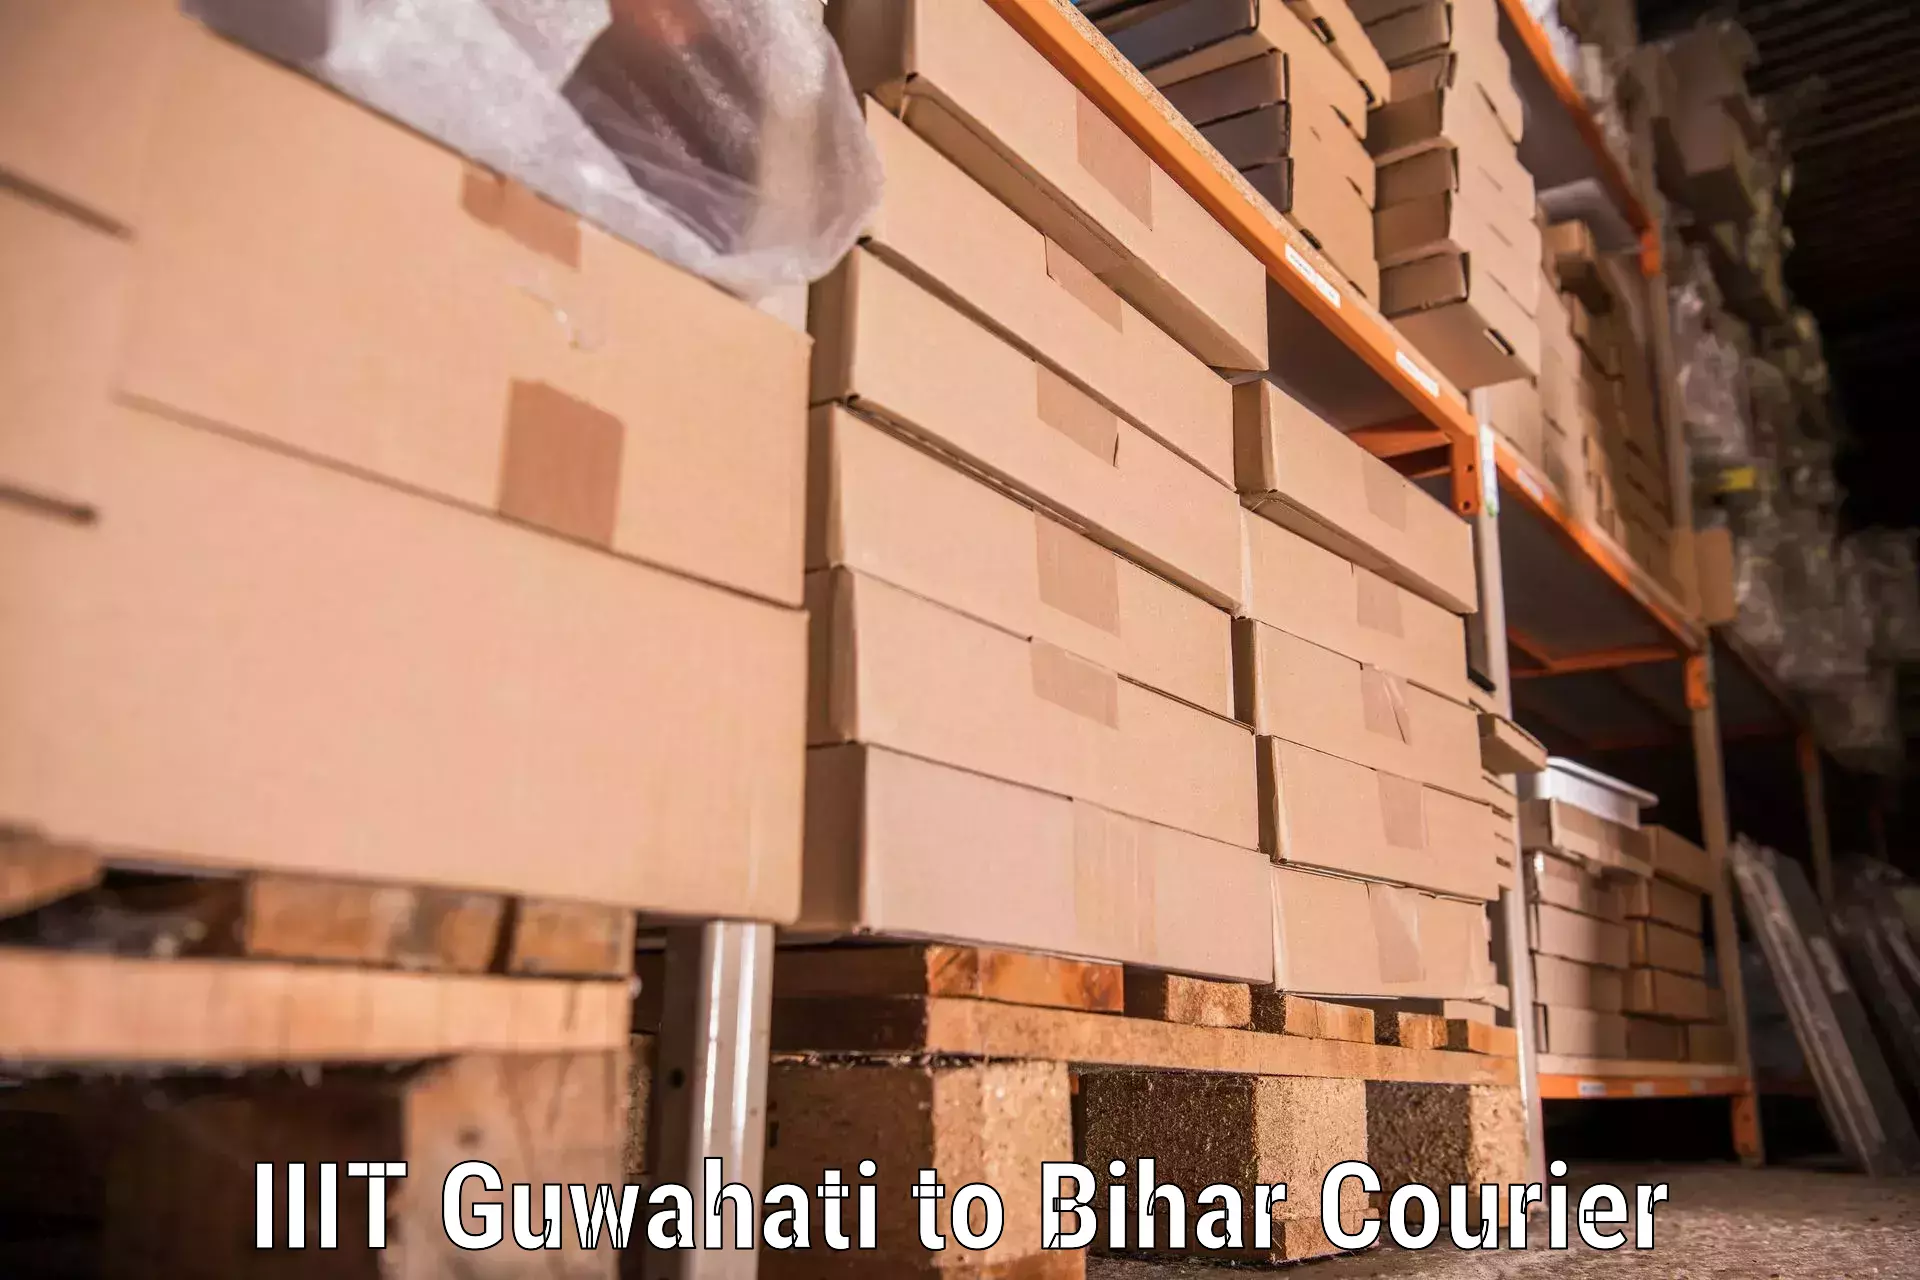 Trusted relocation experts IIIT Guwahati to Bihar